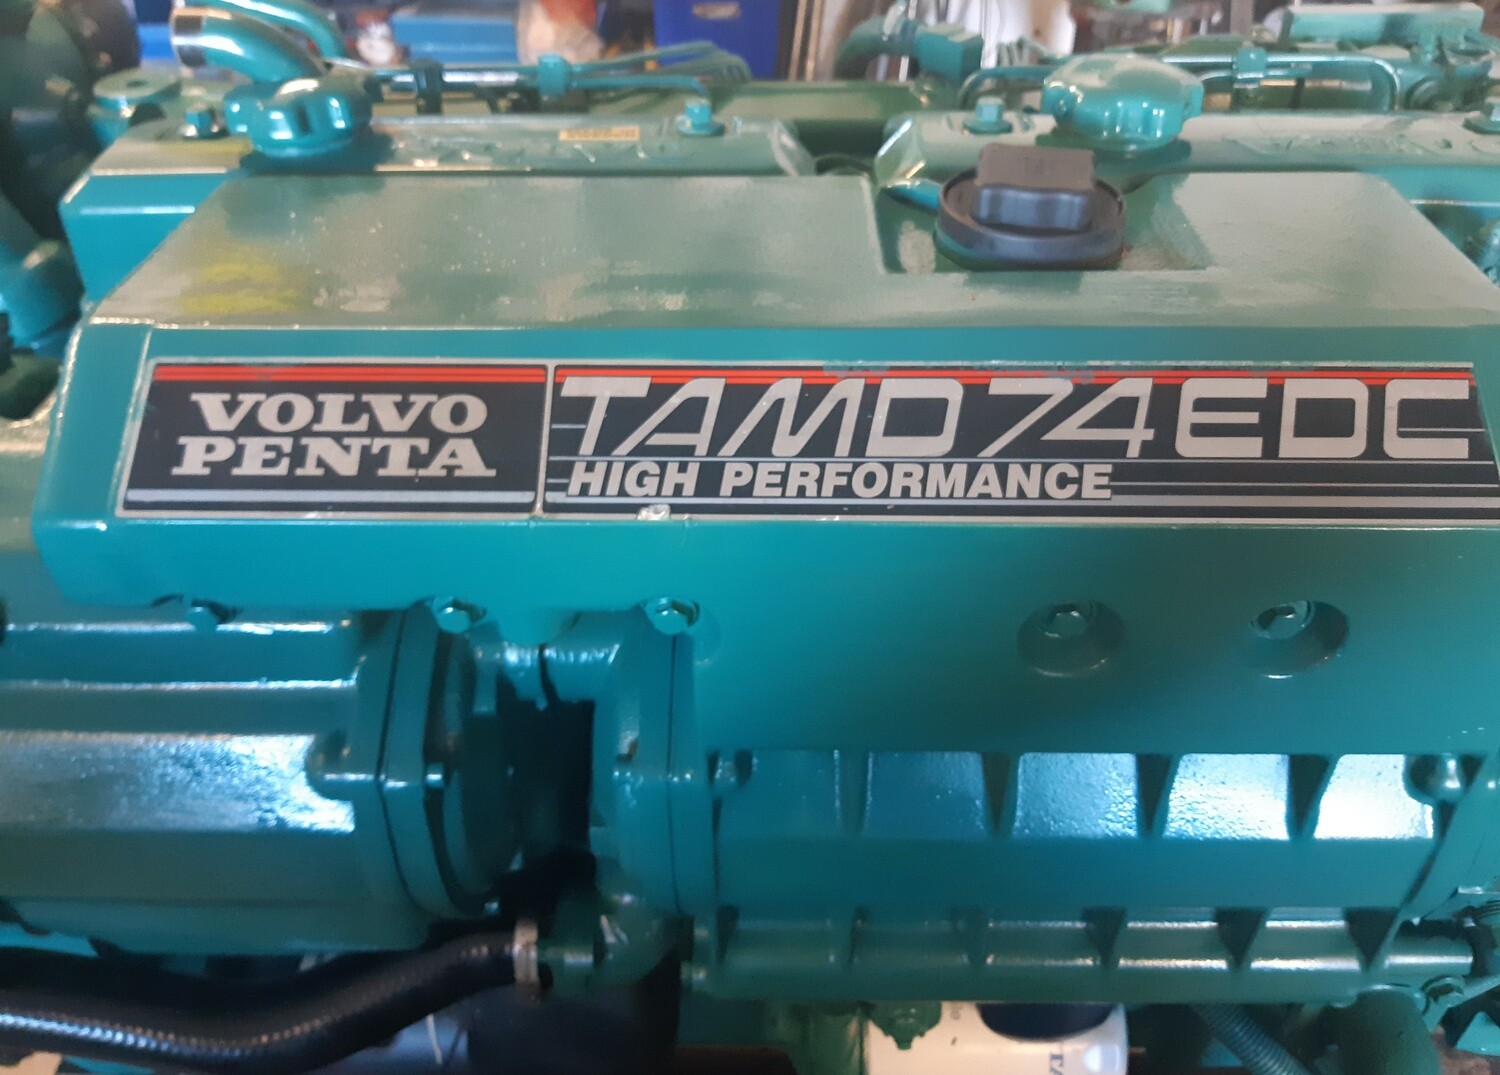 Volvo Penta TAMD74 EDC High Performance, 2002, 480 HP